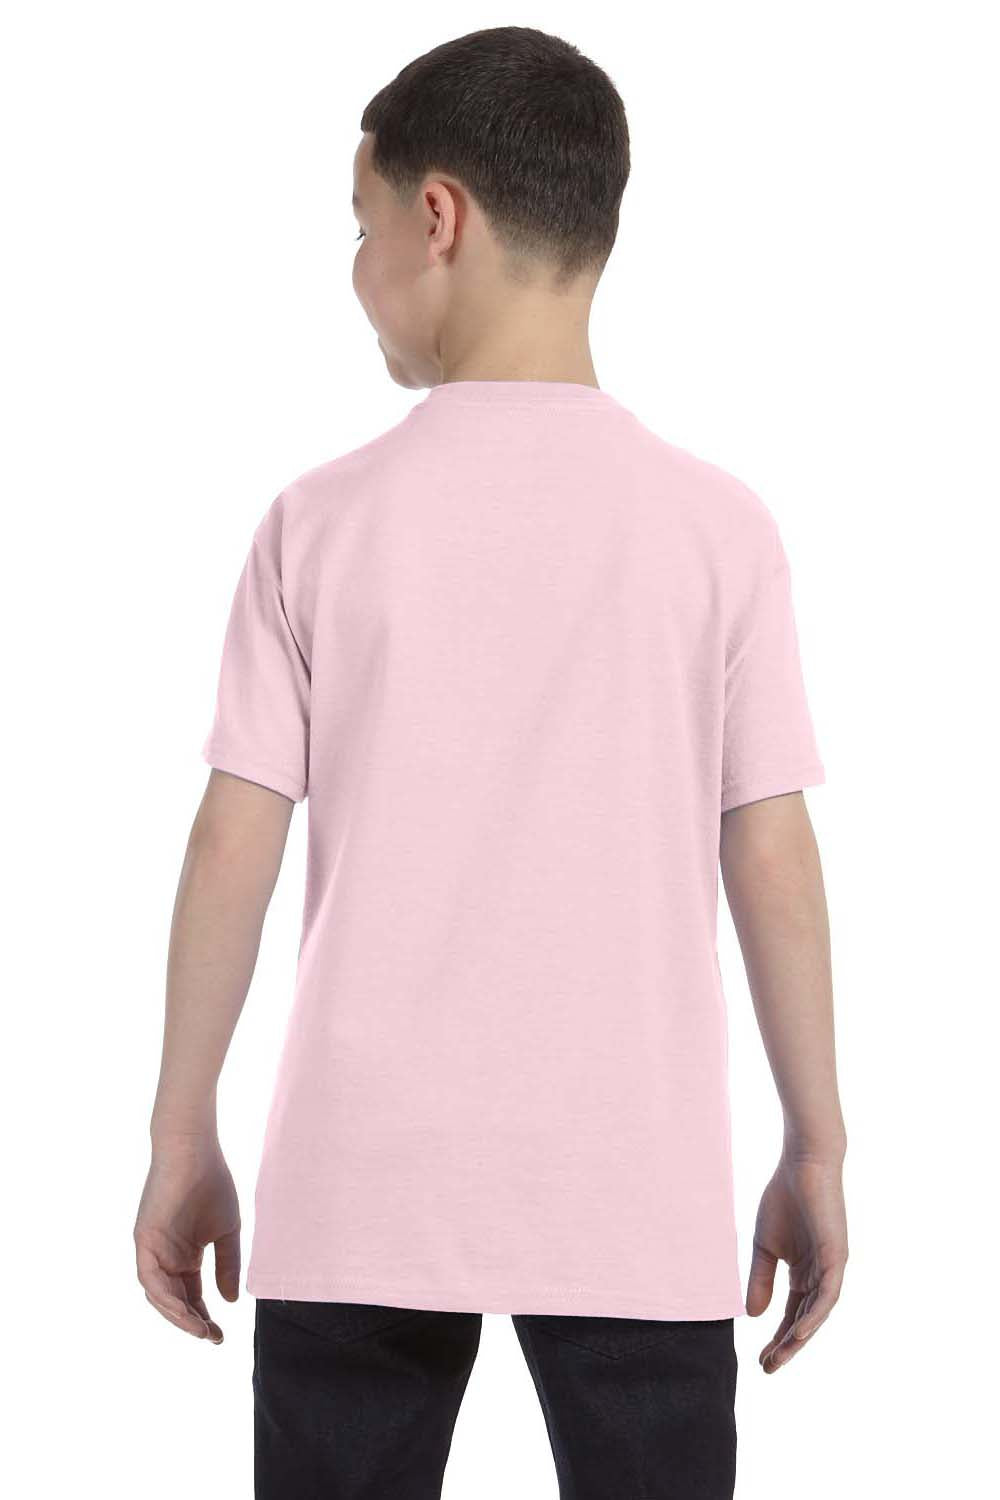 Jerzees 29B Youth Dri-Power Moisture Wicking Short Sleeve Crewneck T-Shirt Classic Pink Back